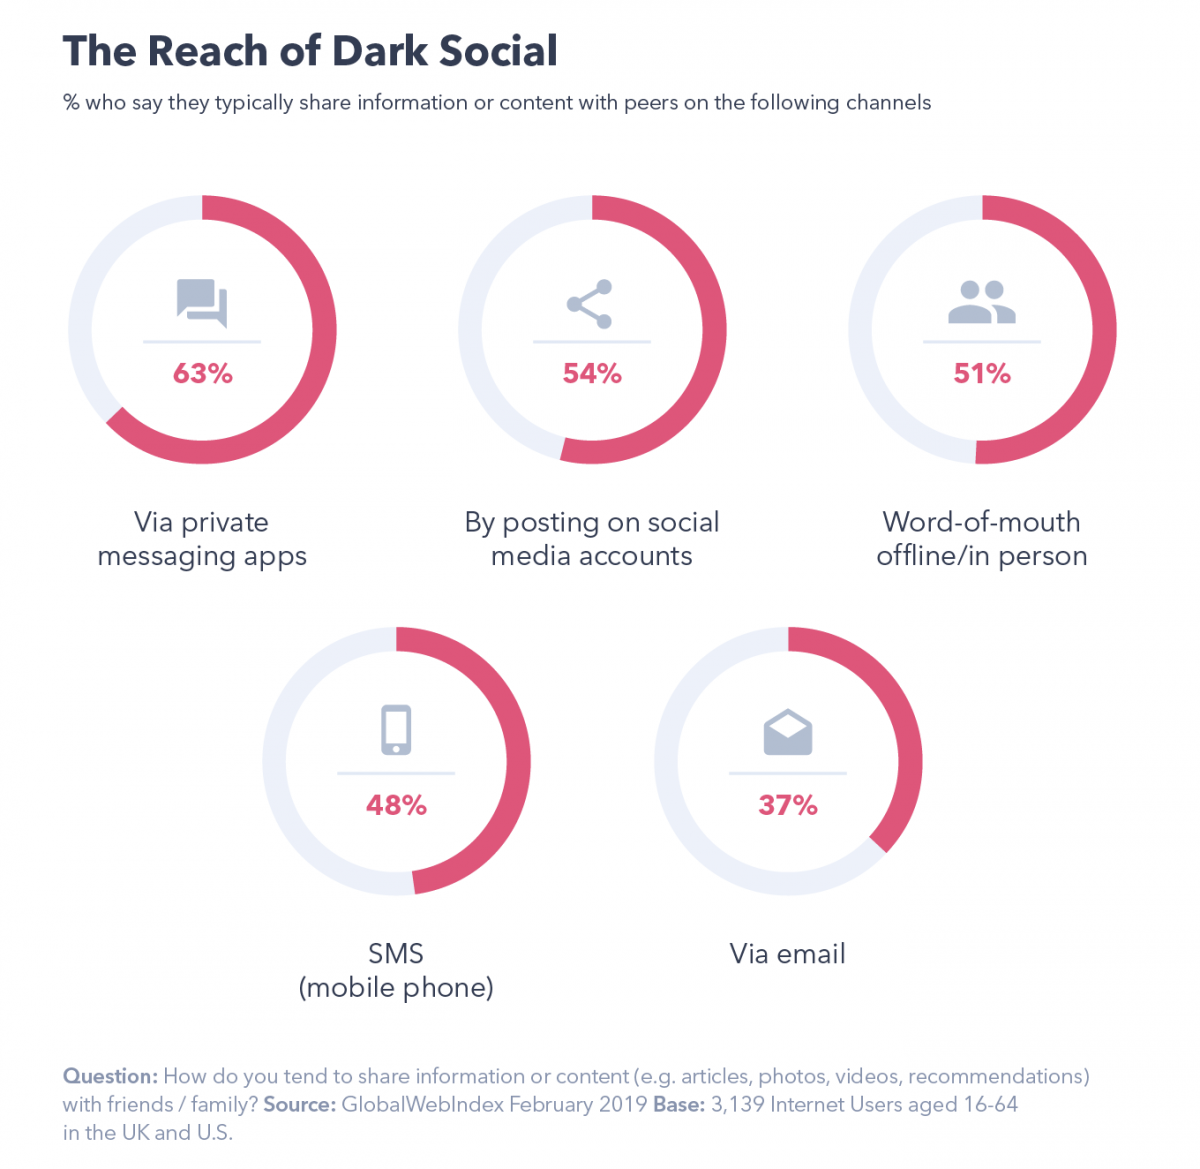 Breakdown of percentages by channel in dark social media.